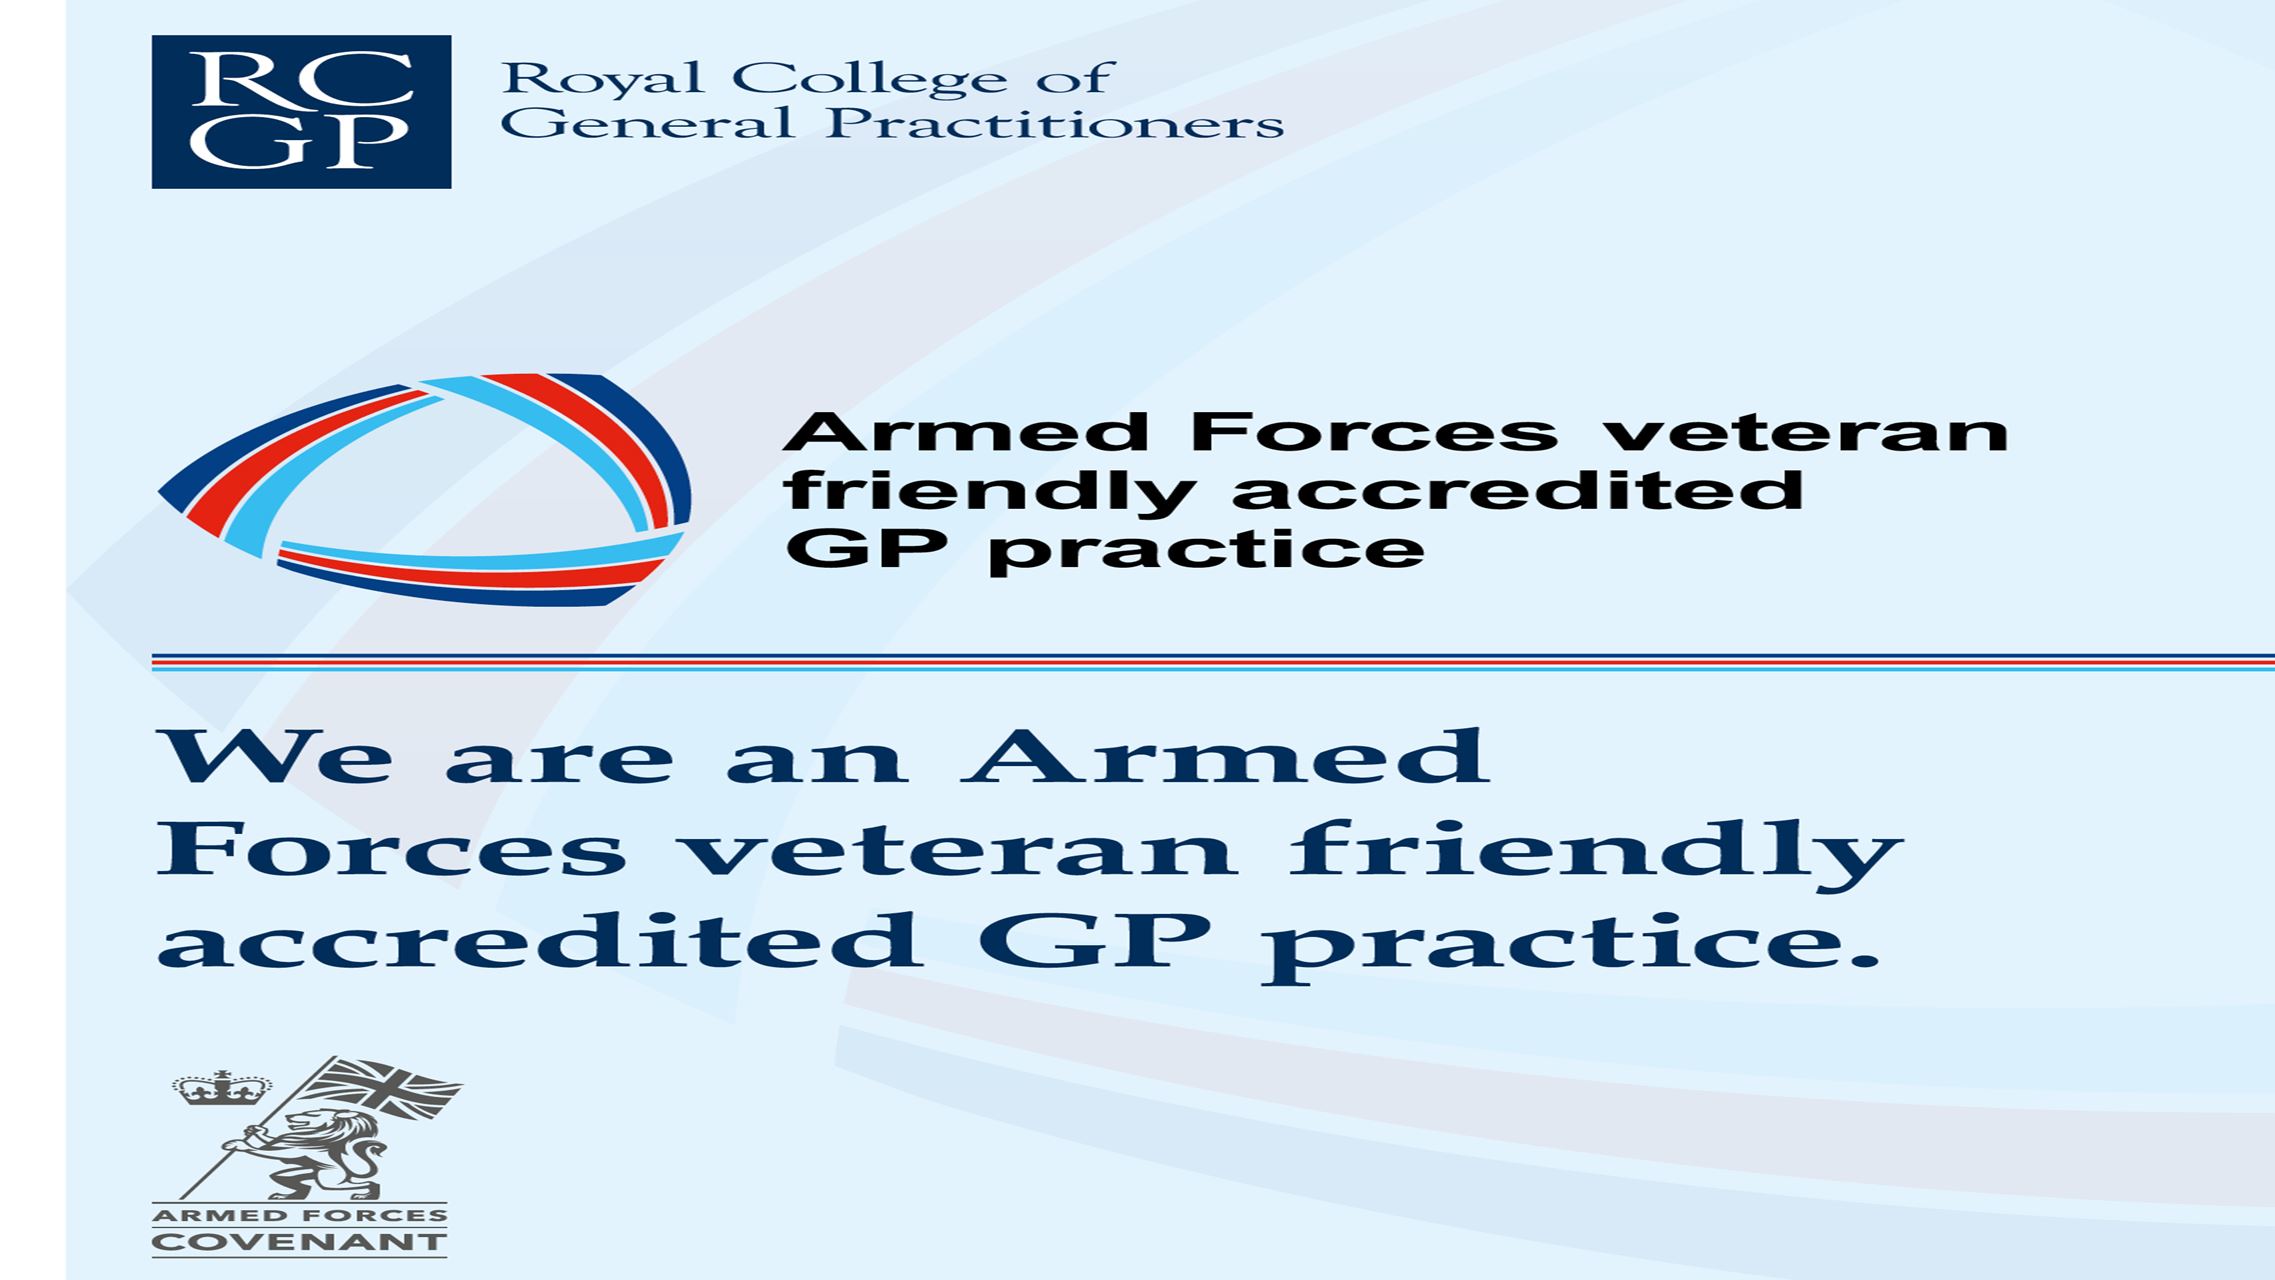 RCGP Armed Forces Veteran acreditation poster